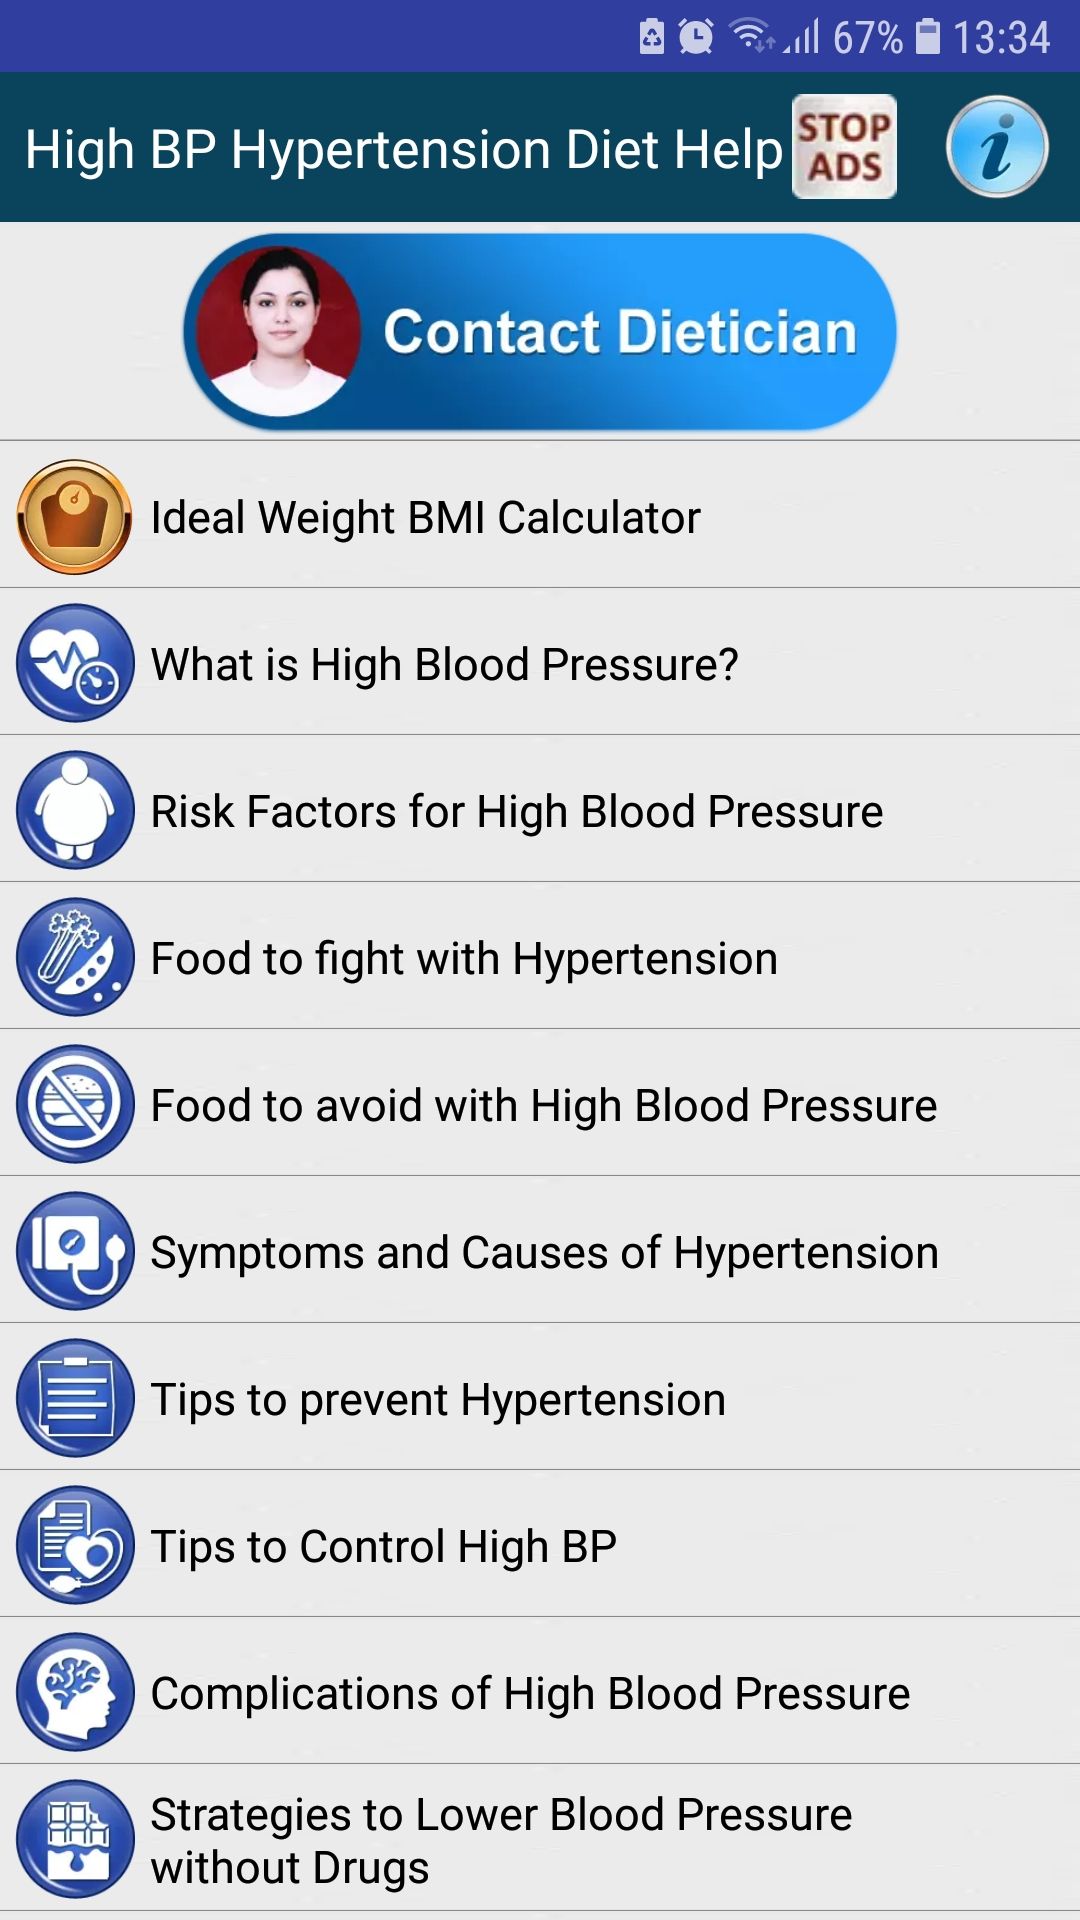 High Blood Pressure Diet Tips mobile app